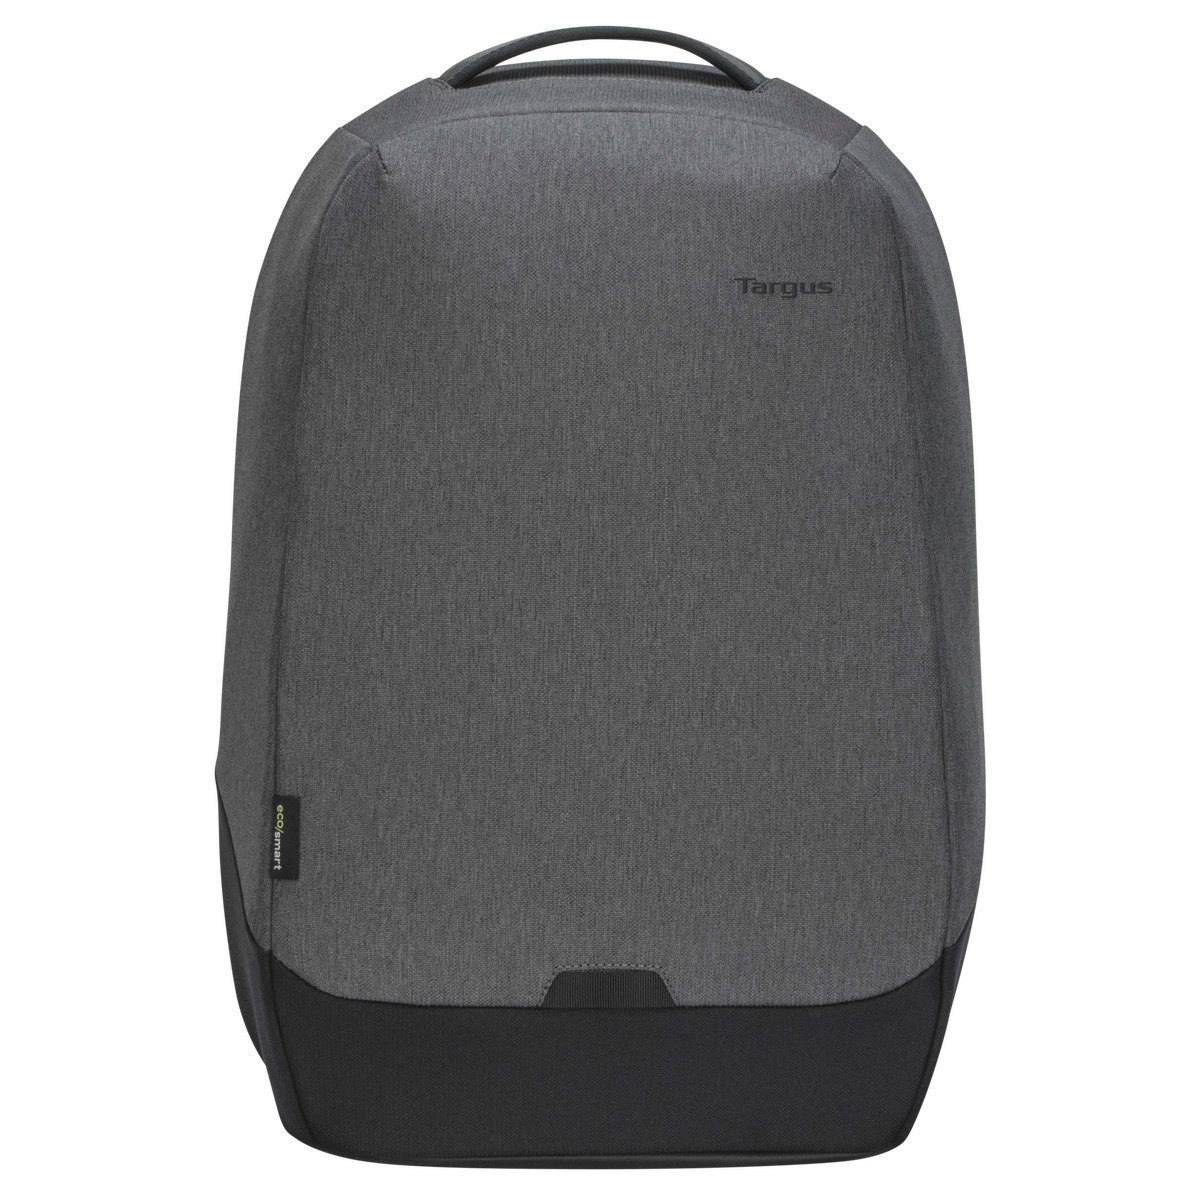 Neuware, Sofortkauf Targus Notebook-Rucksack Security Cypress 15.6 Backpack Eco